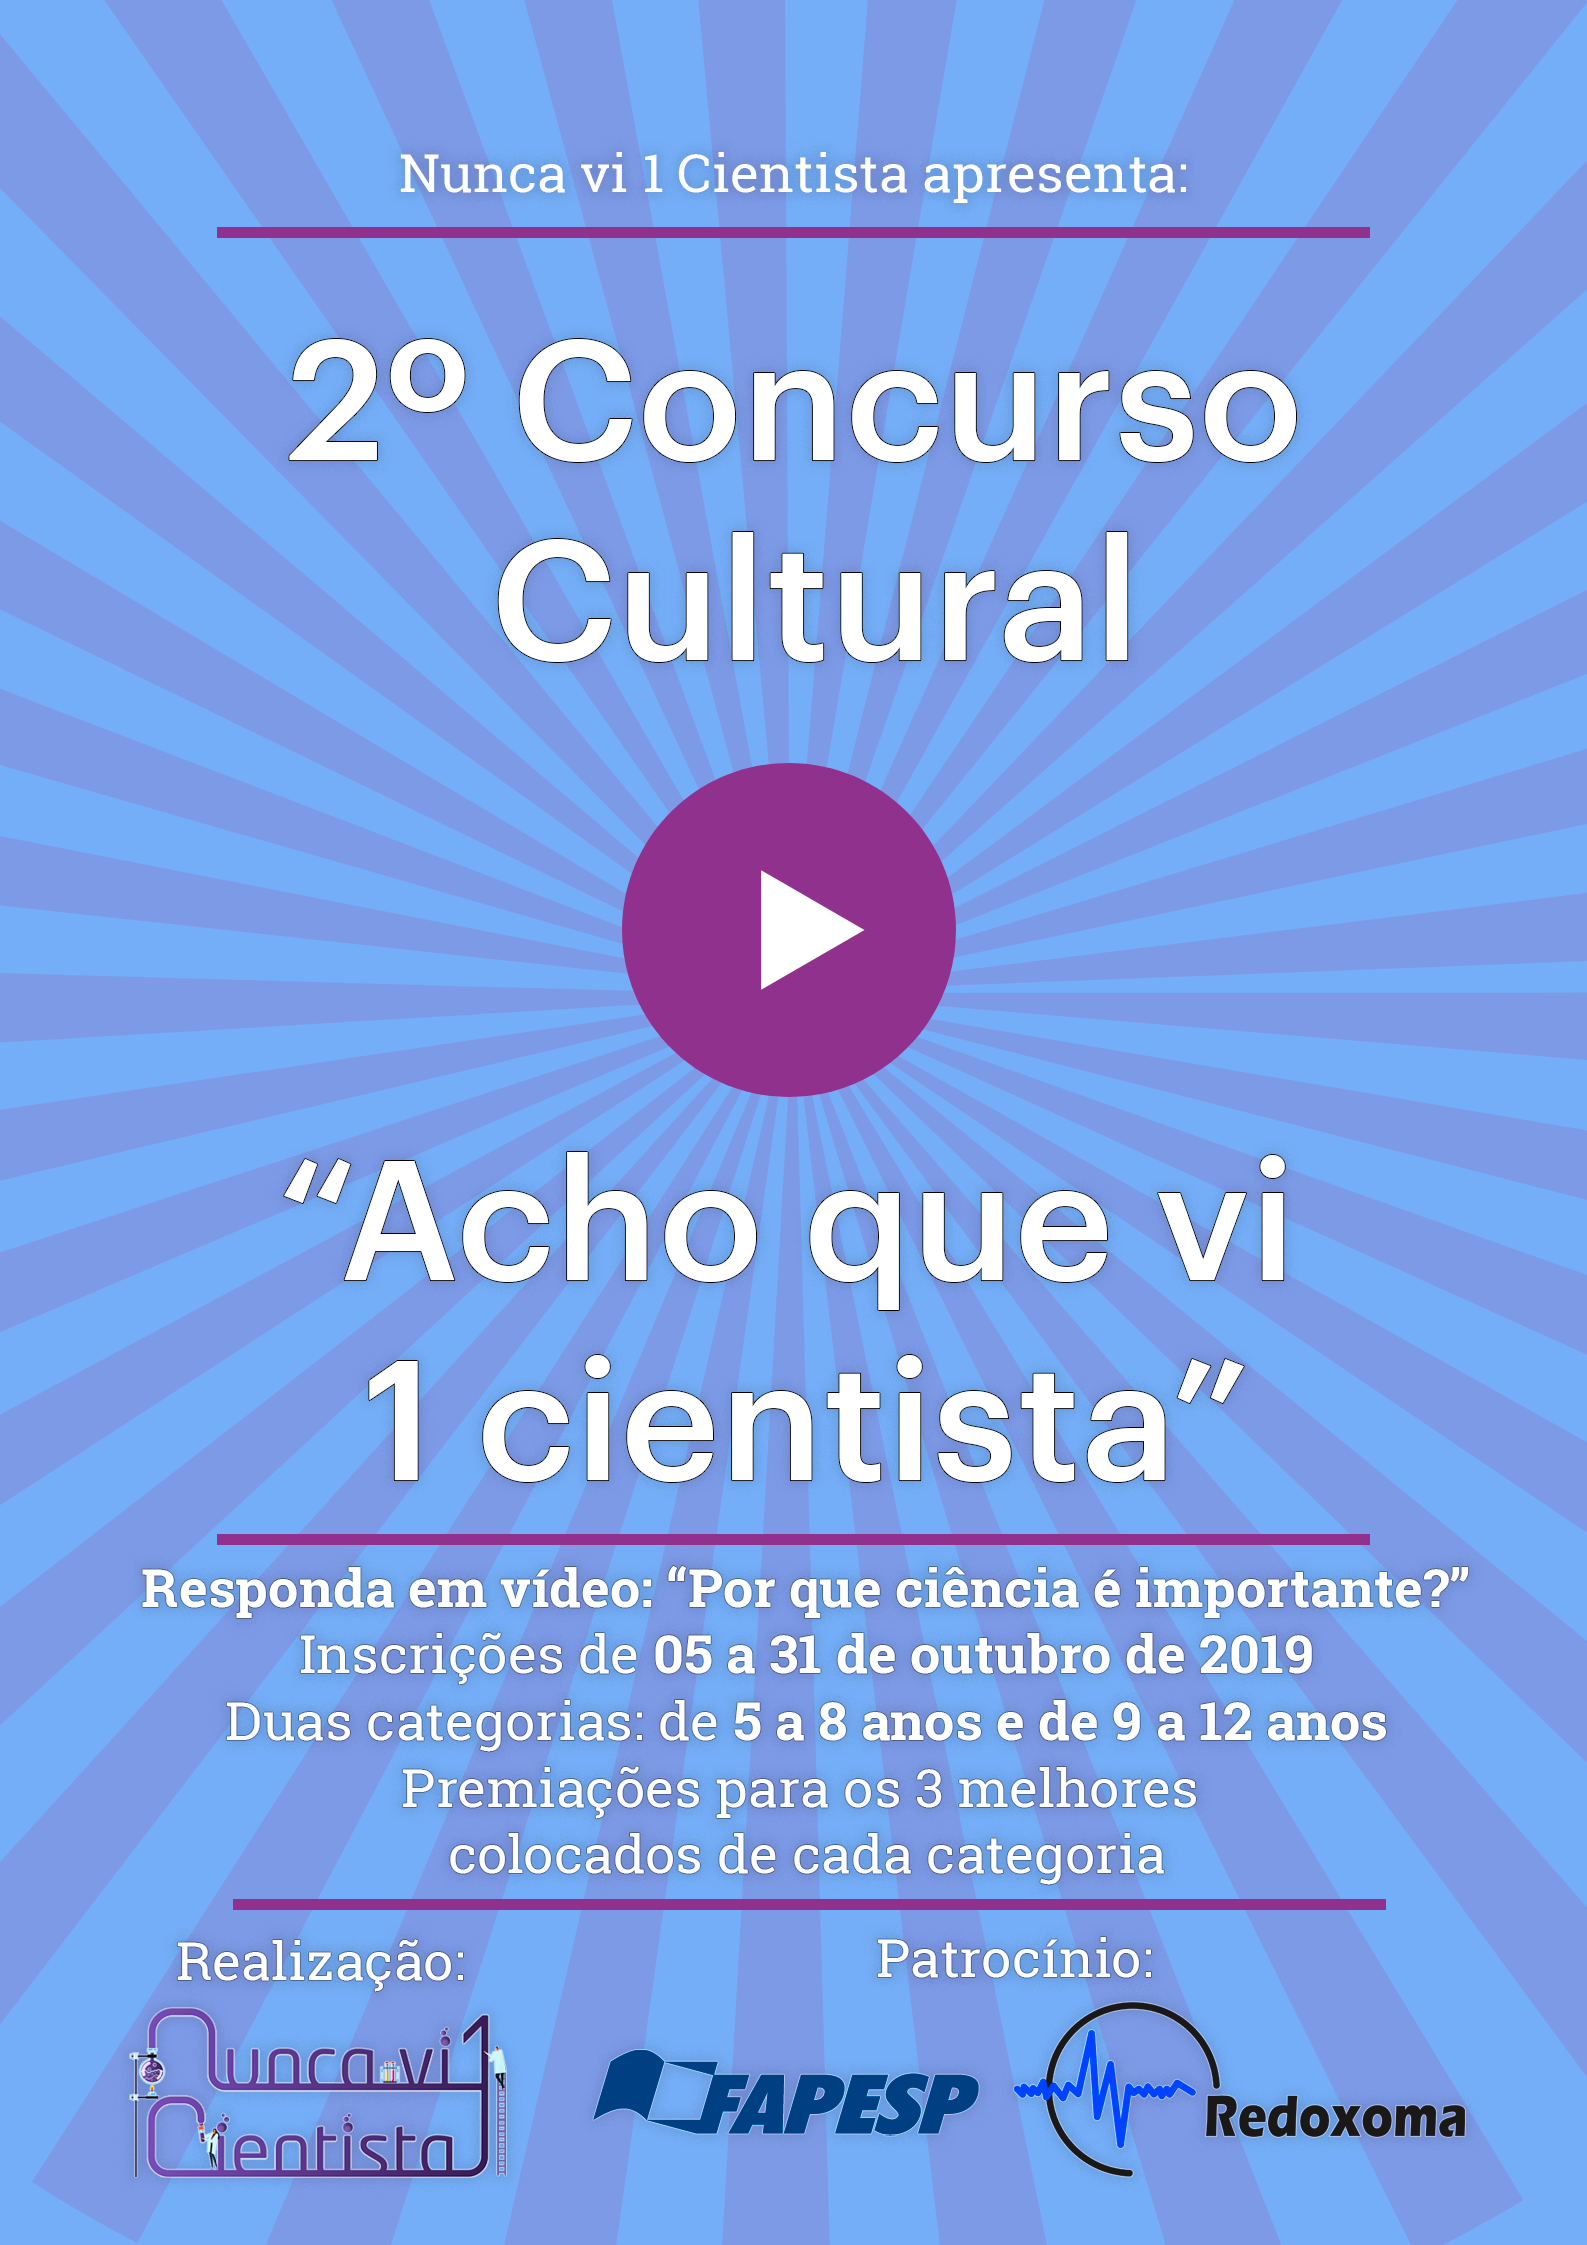 2º Concurso Cultural “Acho que vi 1 cientista”